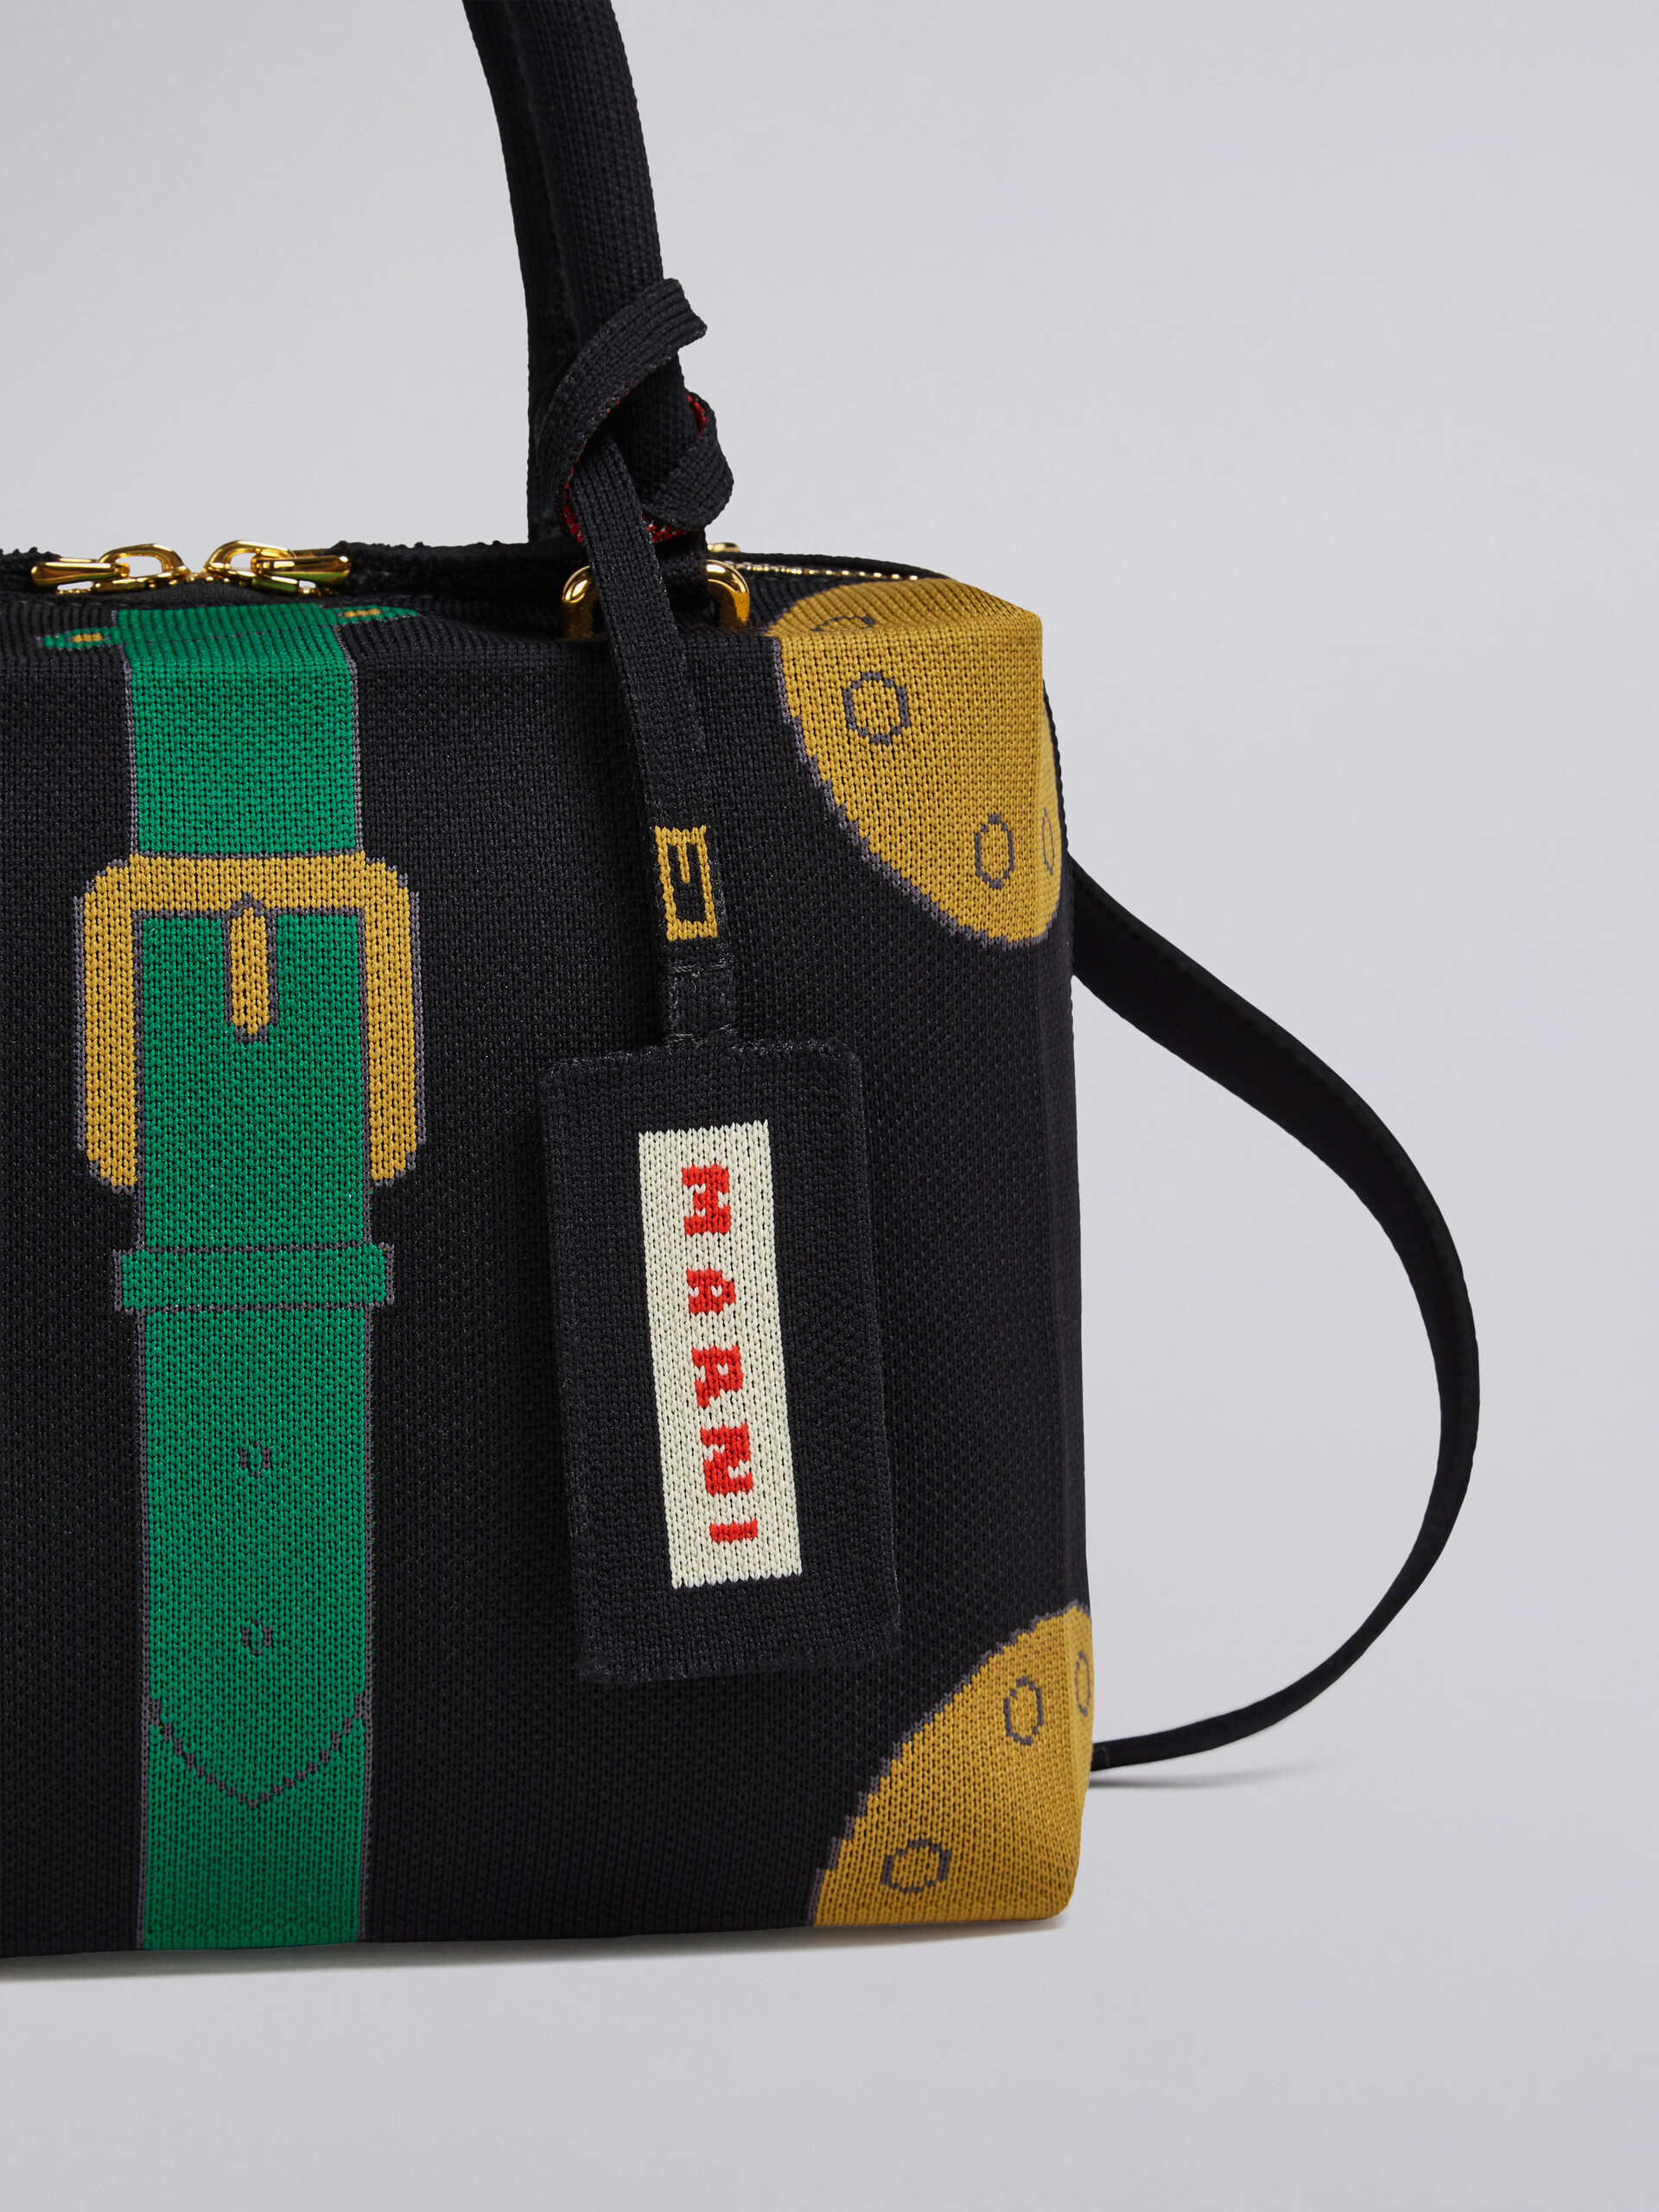 CUBIC bag in black trompe-l'œil jacquard - Handbag - Image 5